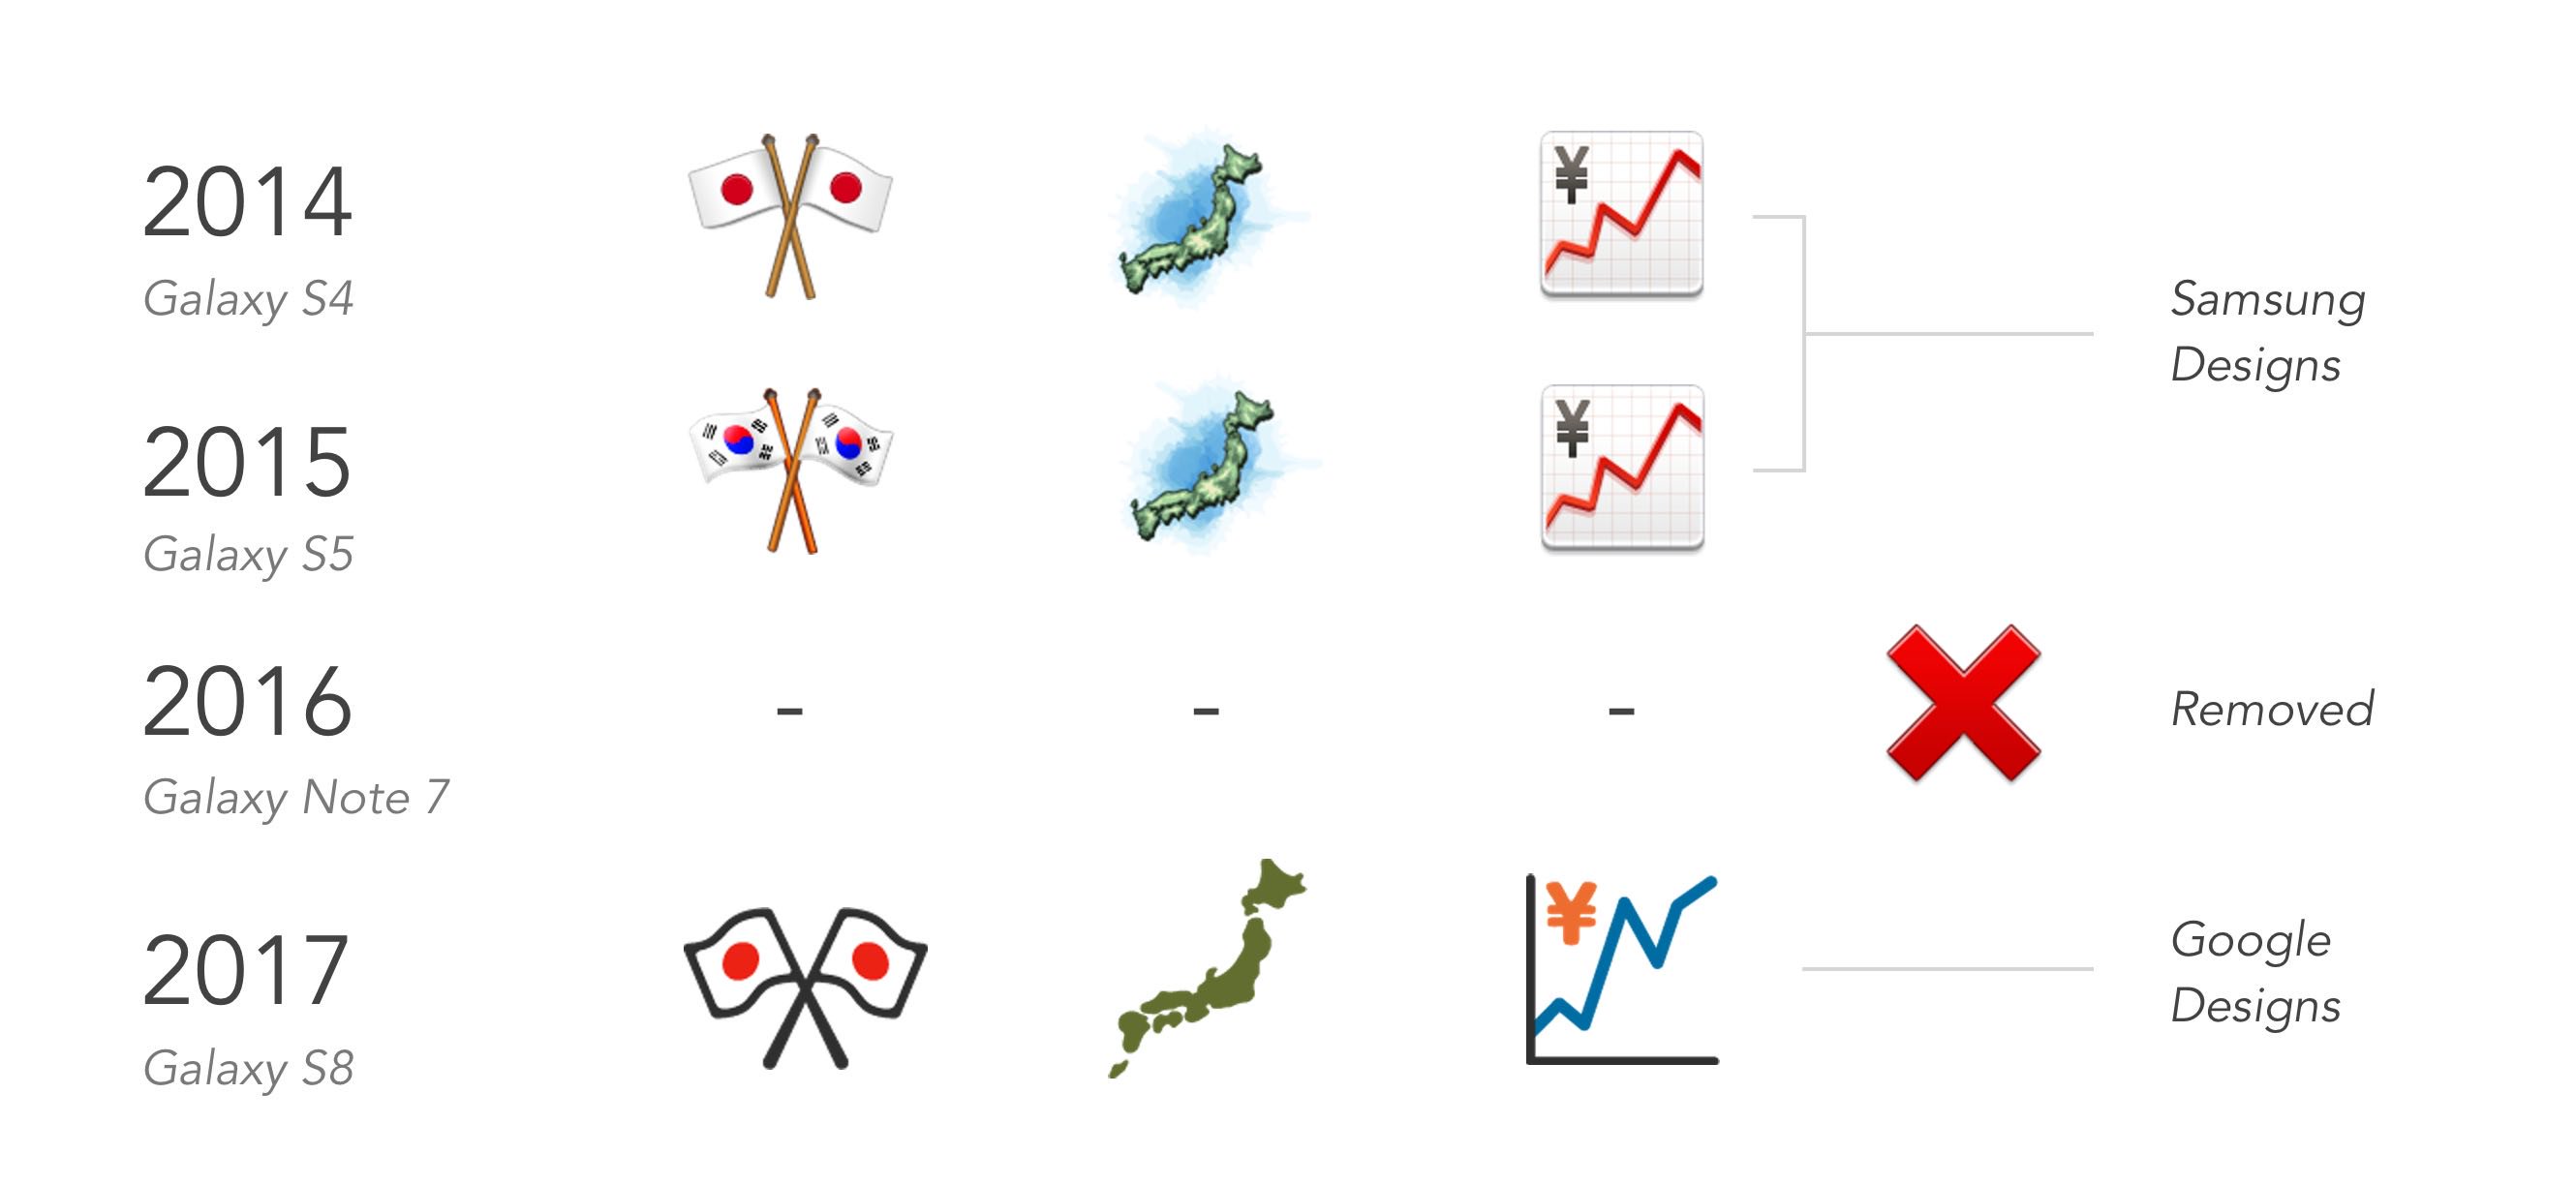 samsung-removed-japanese-emojis-emojipedia-update